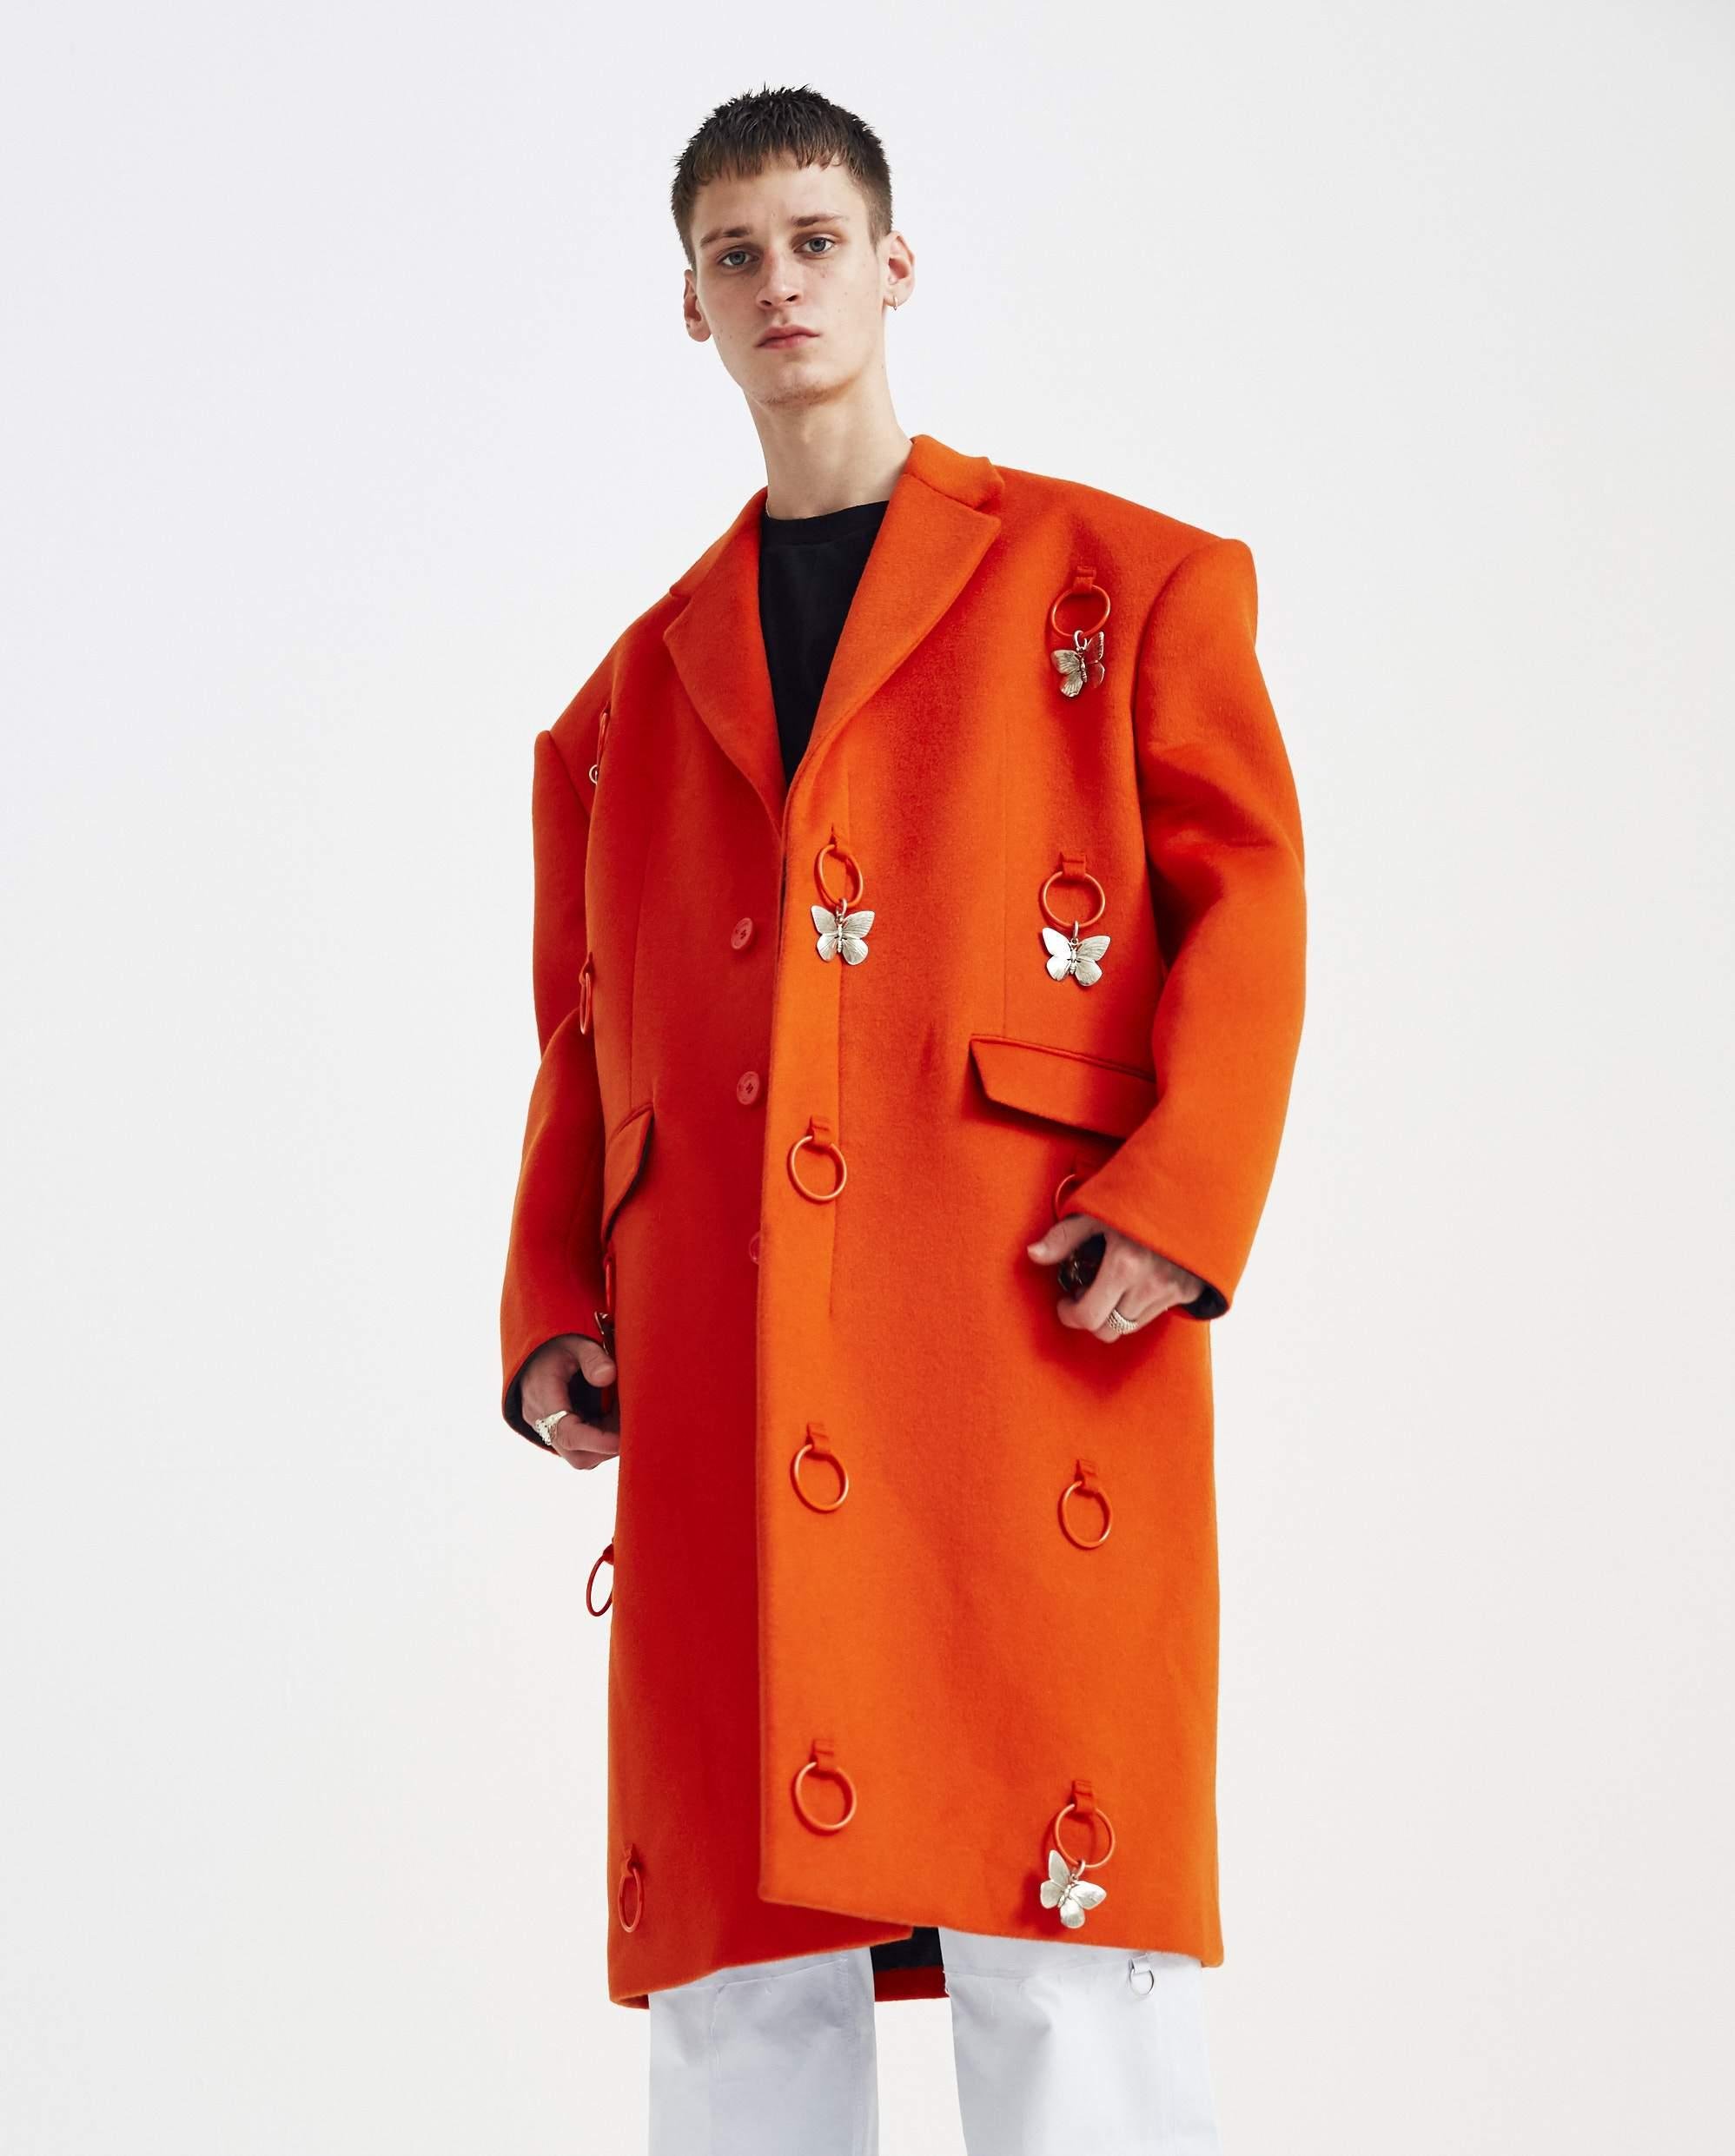 Raf Simons Wool Embellished Oversized Coat in Orange for Men - Lyst